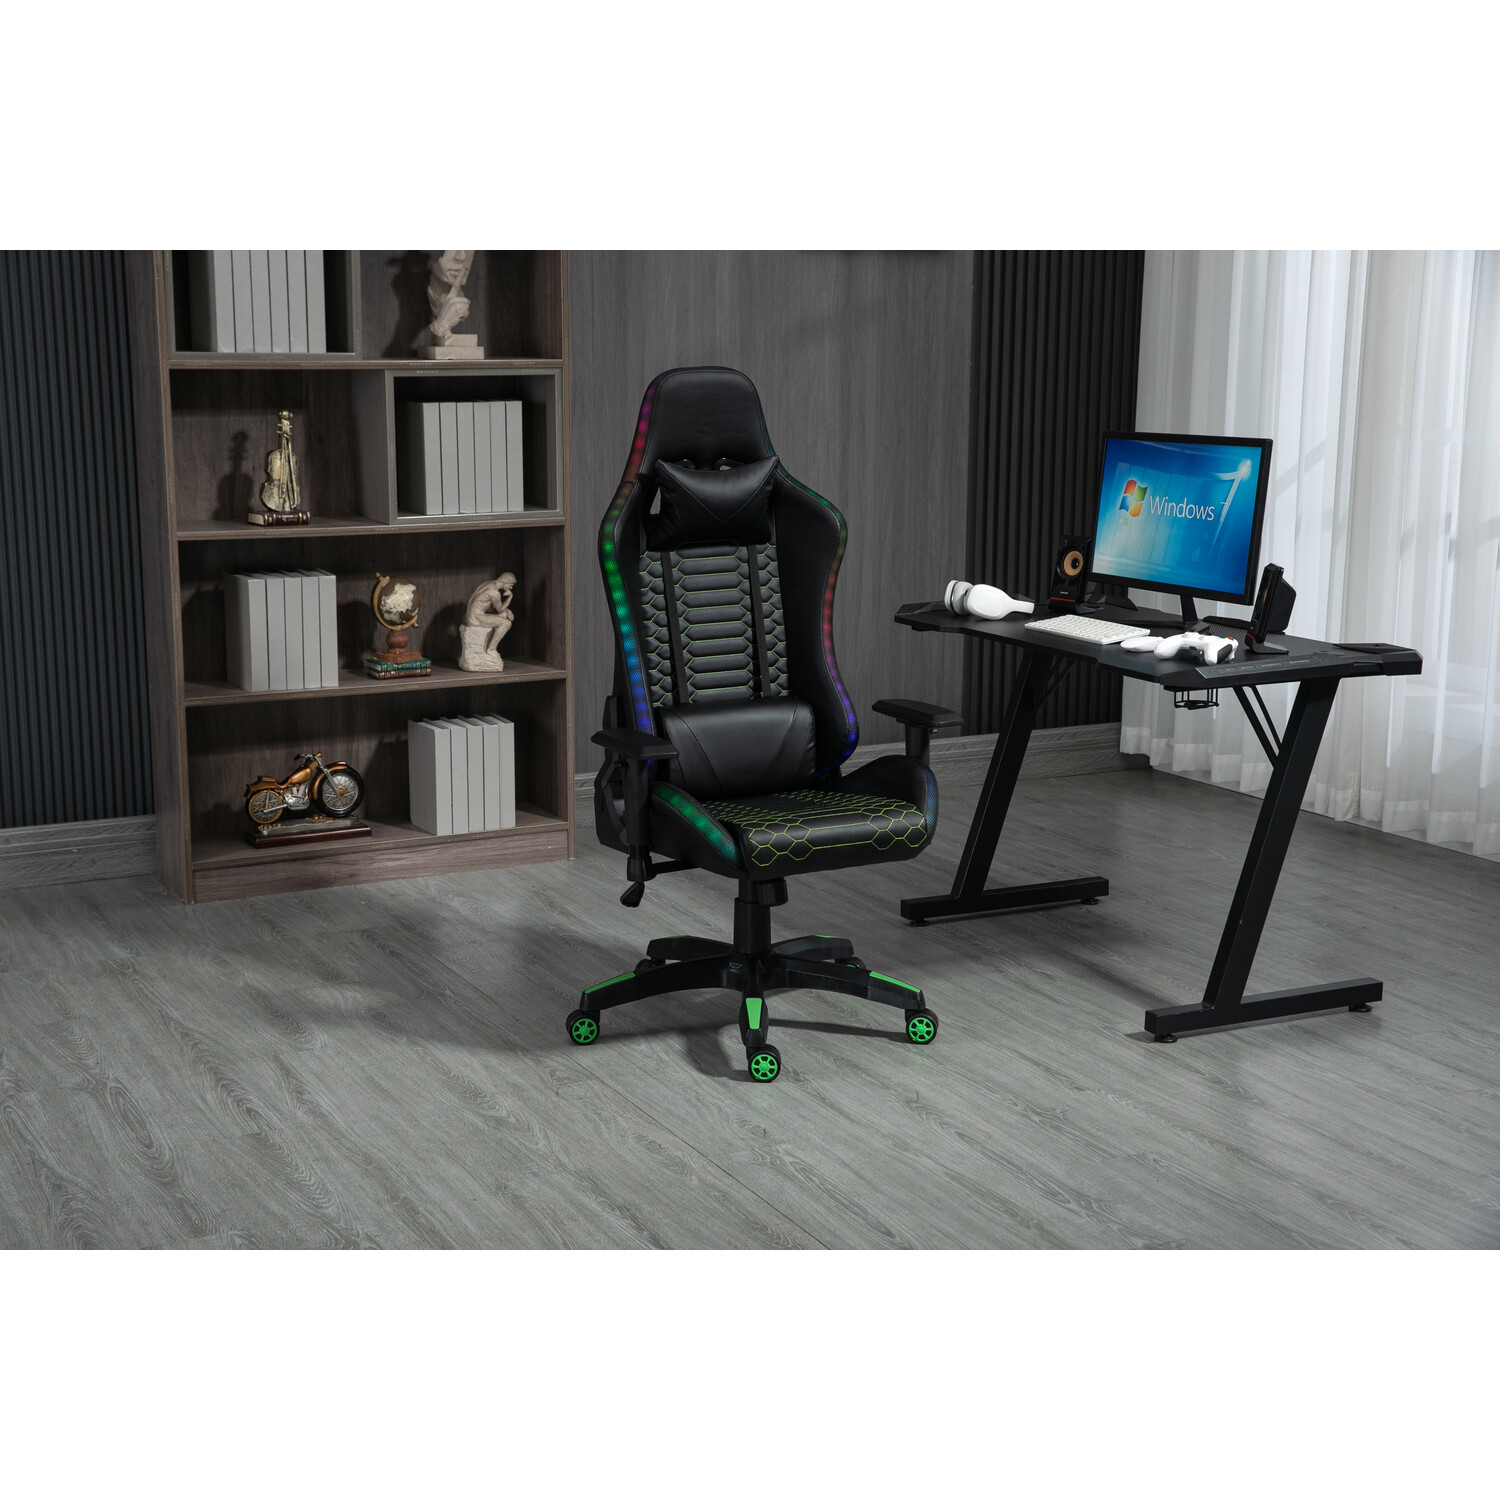 Triton LED Gaming Chair - Black Image 2